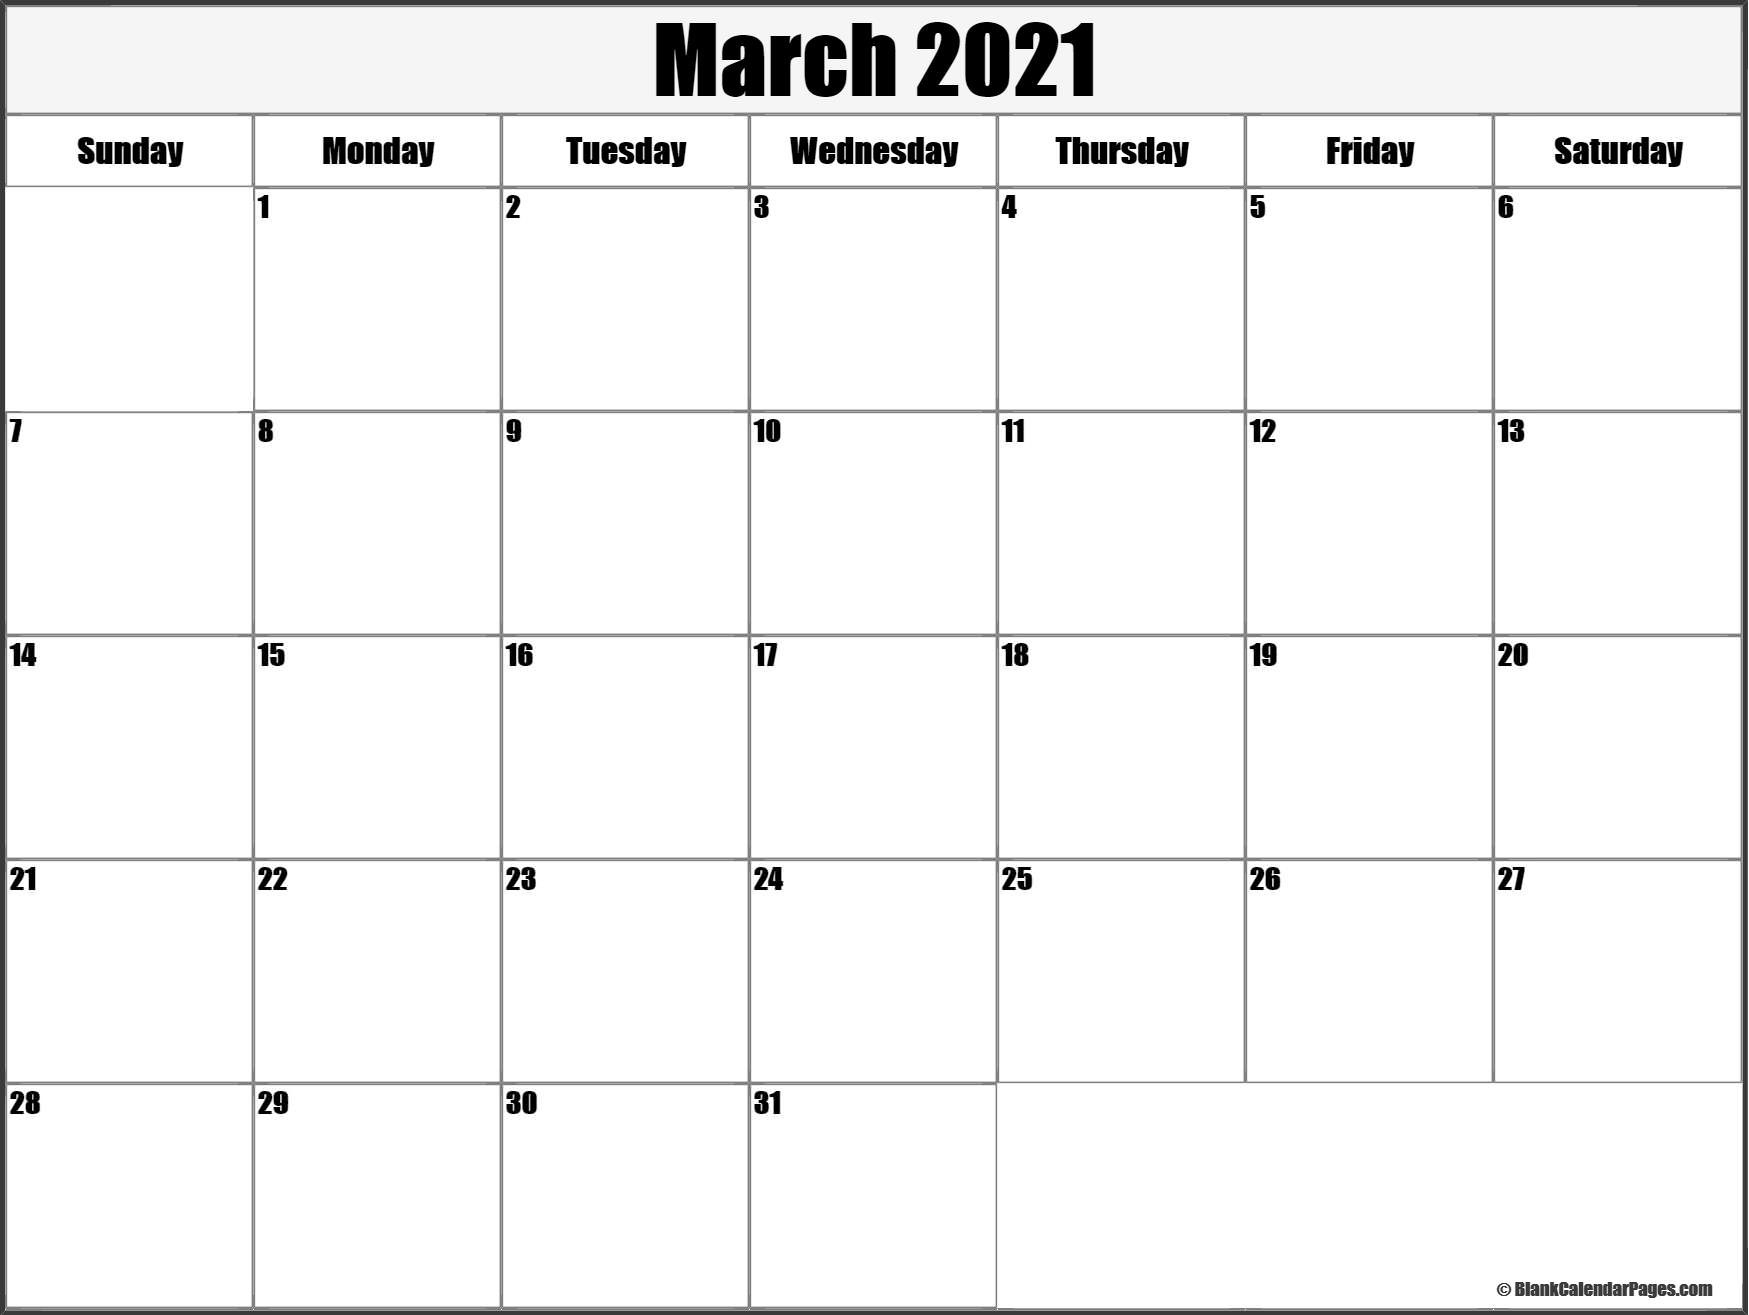 March 2021 Blank Calendar Collection.-Blank Calendar 2021 Printable Monthly